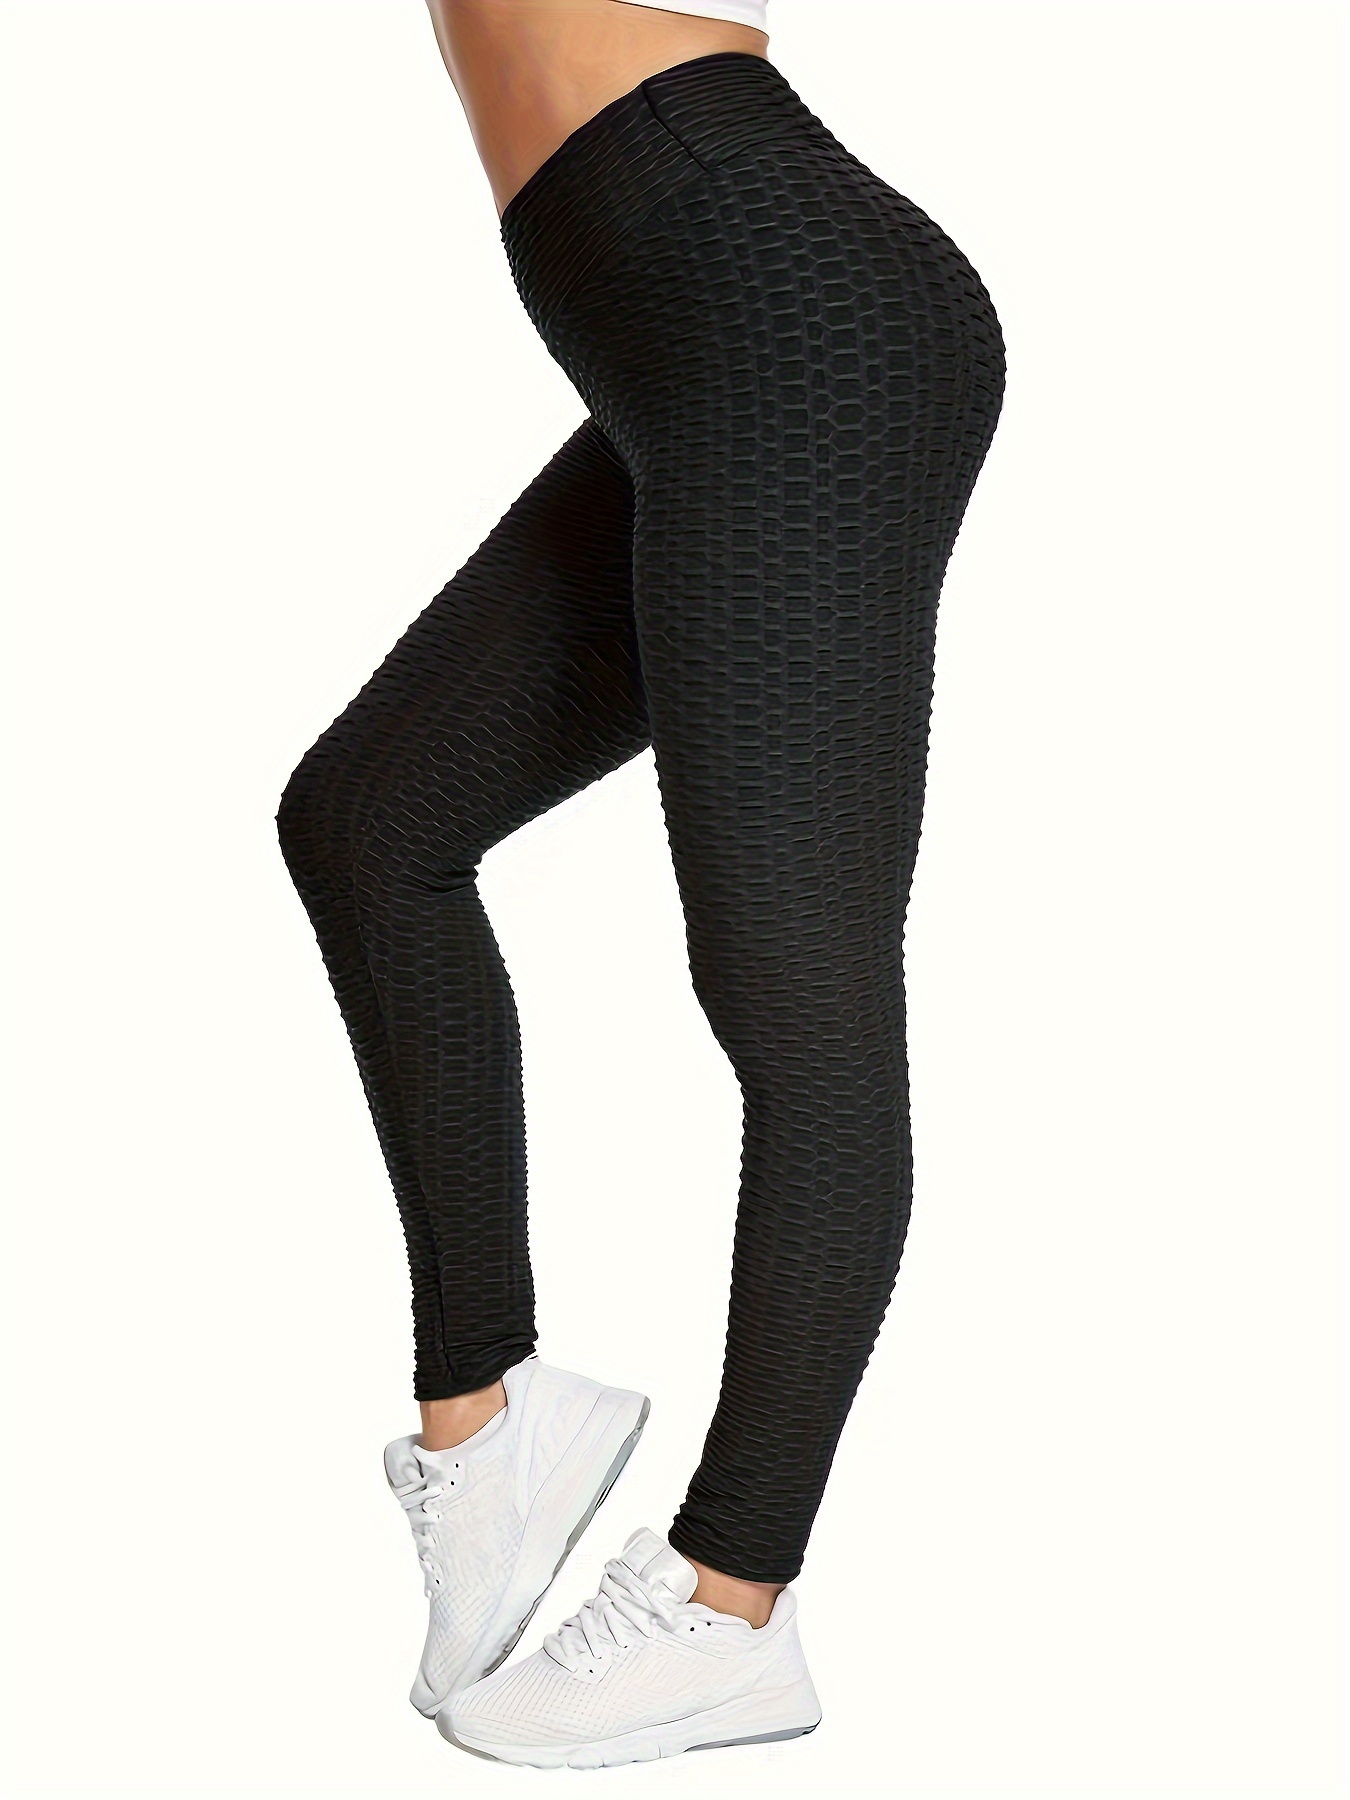 Tangerine Activewear Black Yoga Pants Womens Large  Pants for women, Black  yoga pants, Womens activewear